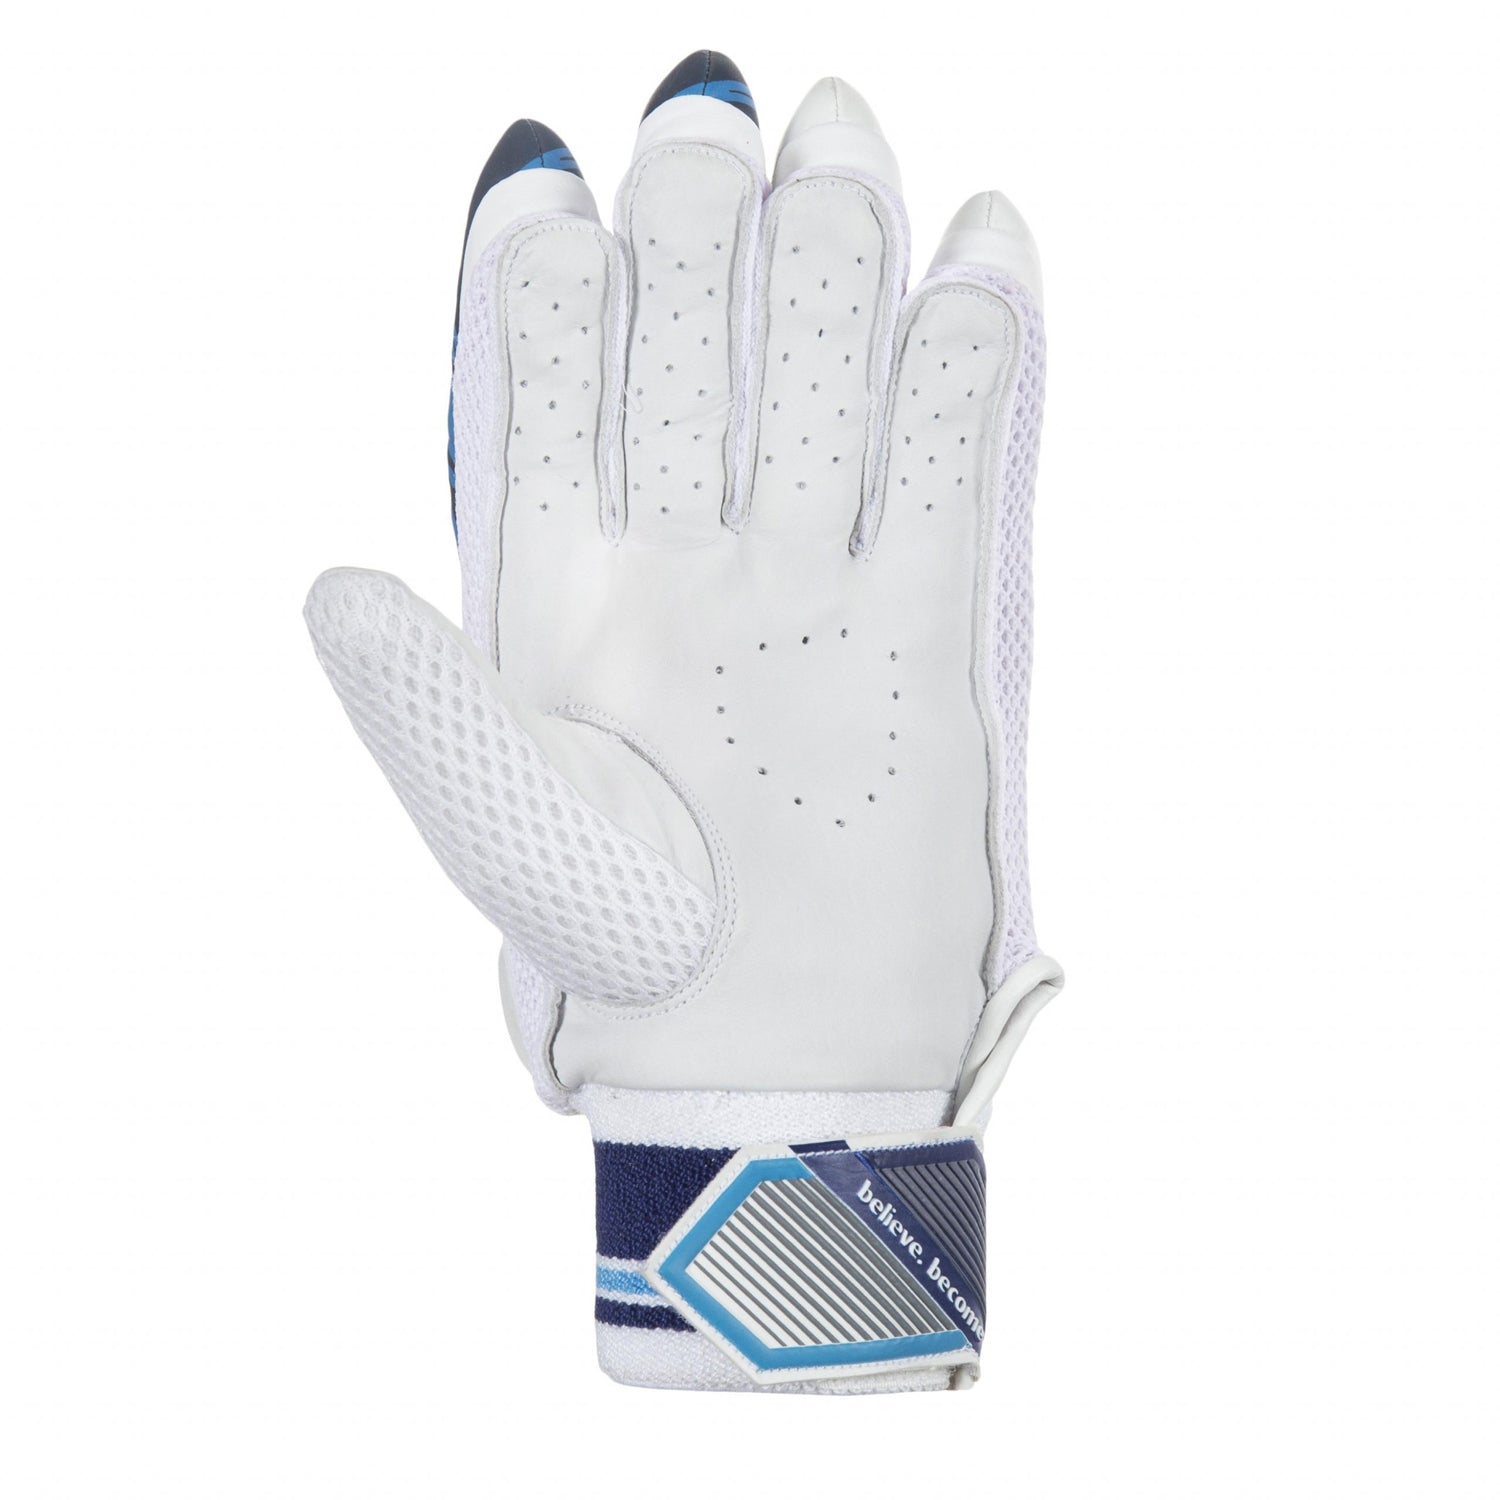 SG Super League Batting Gloves - Left Hand - Best Price online Prokicksports.com